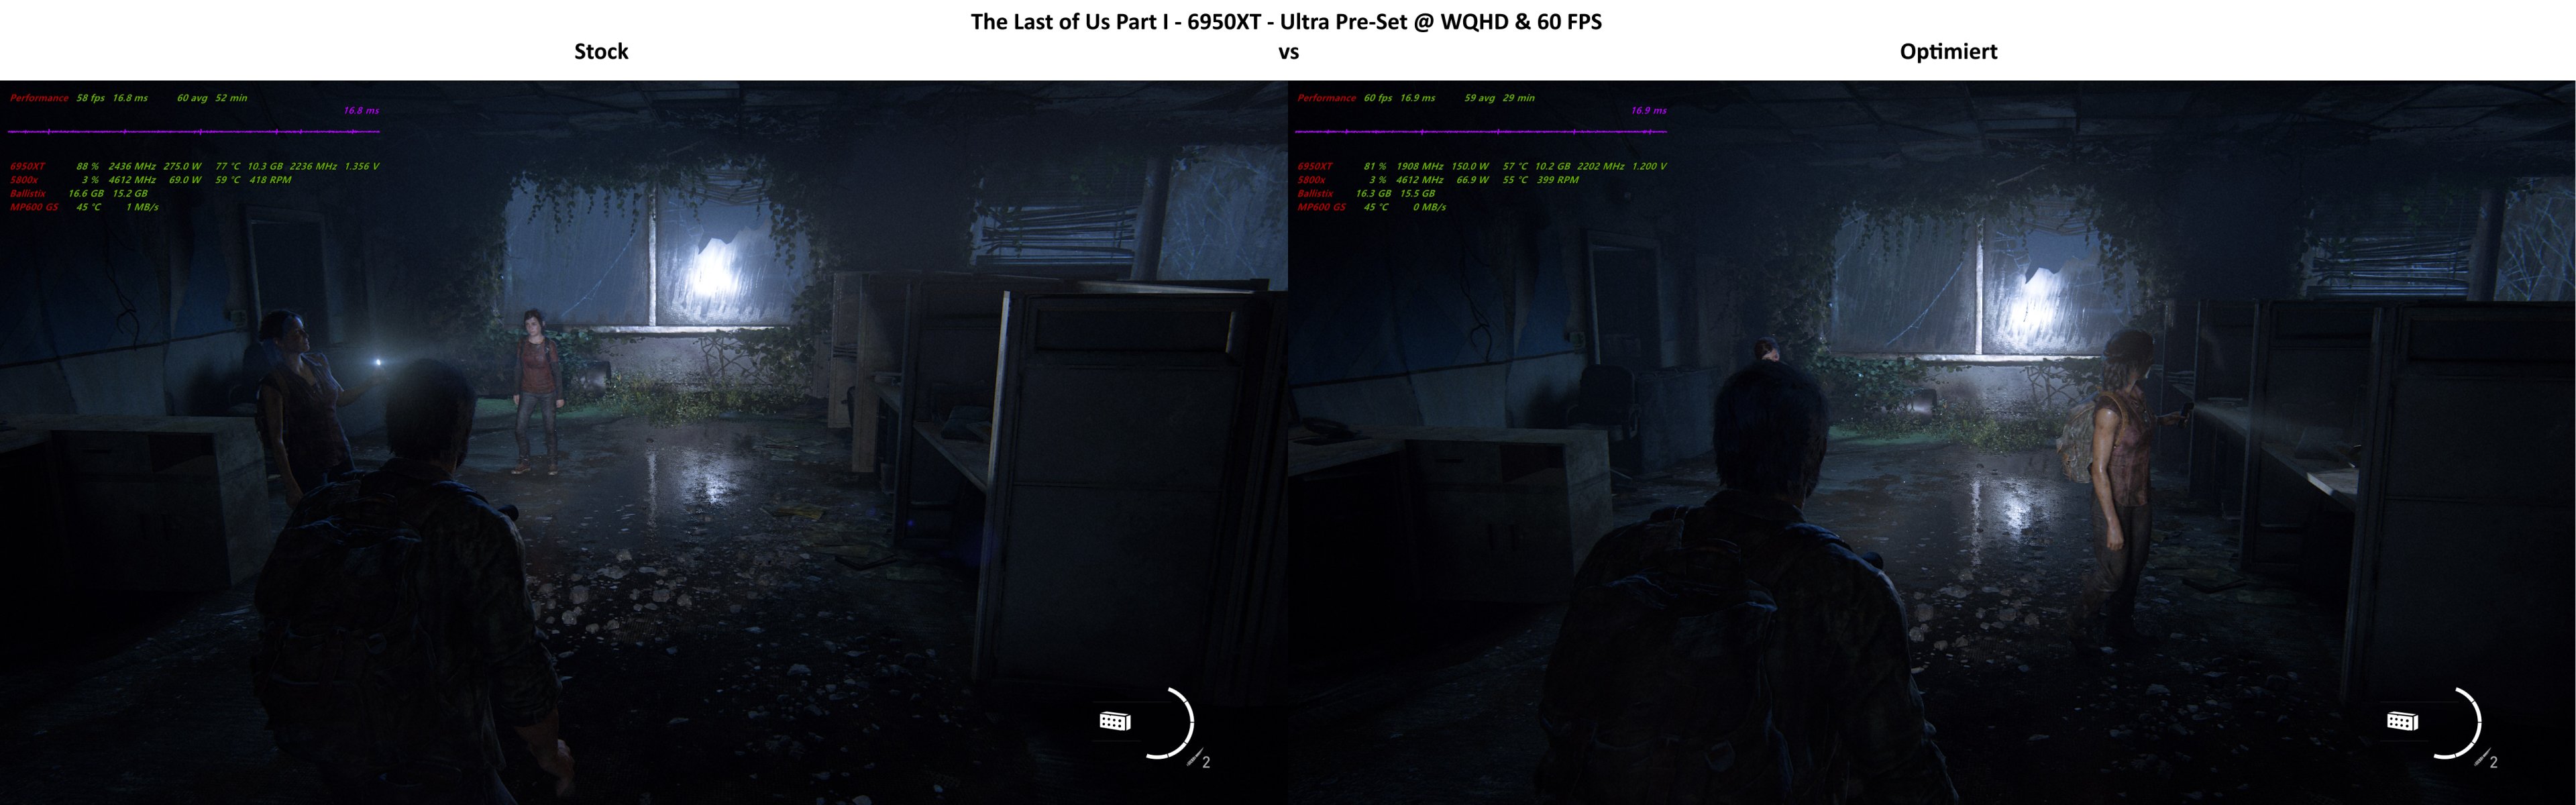 The Last of Us Part I - 6950XT - Ultra Pre-Set @ WQHD & 60 FPS - Stock vs Optimiert.jpg